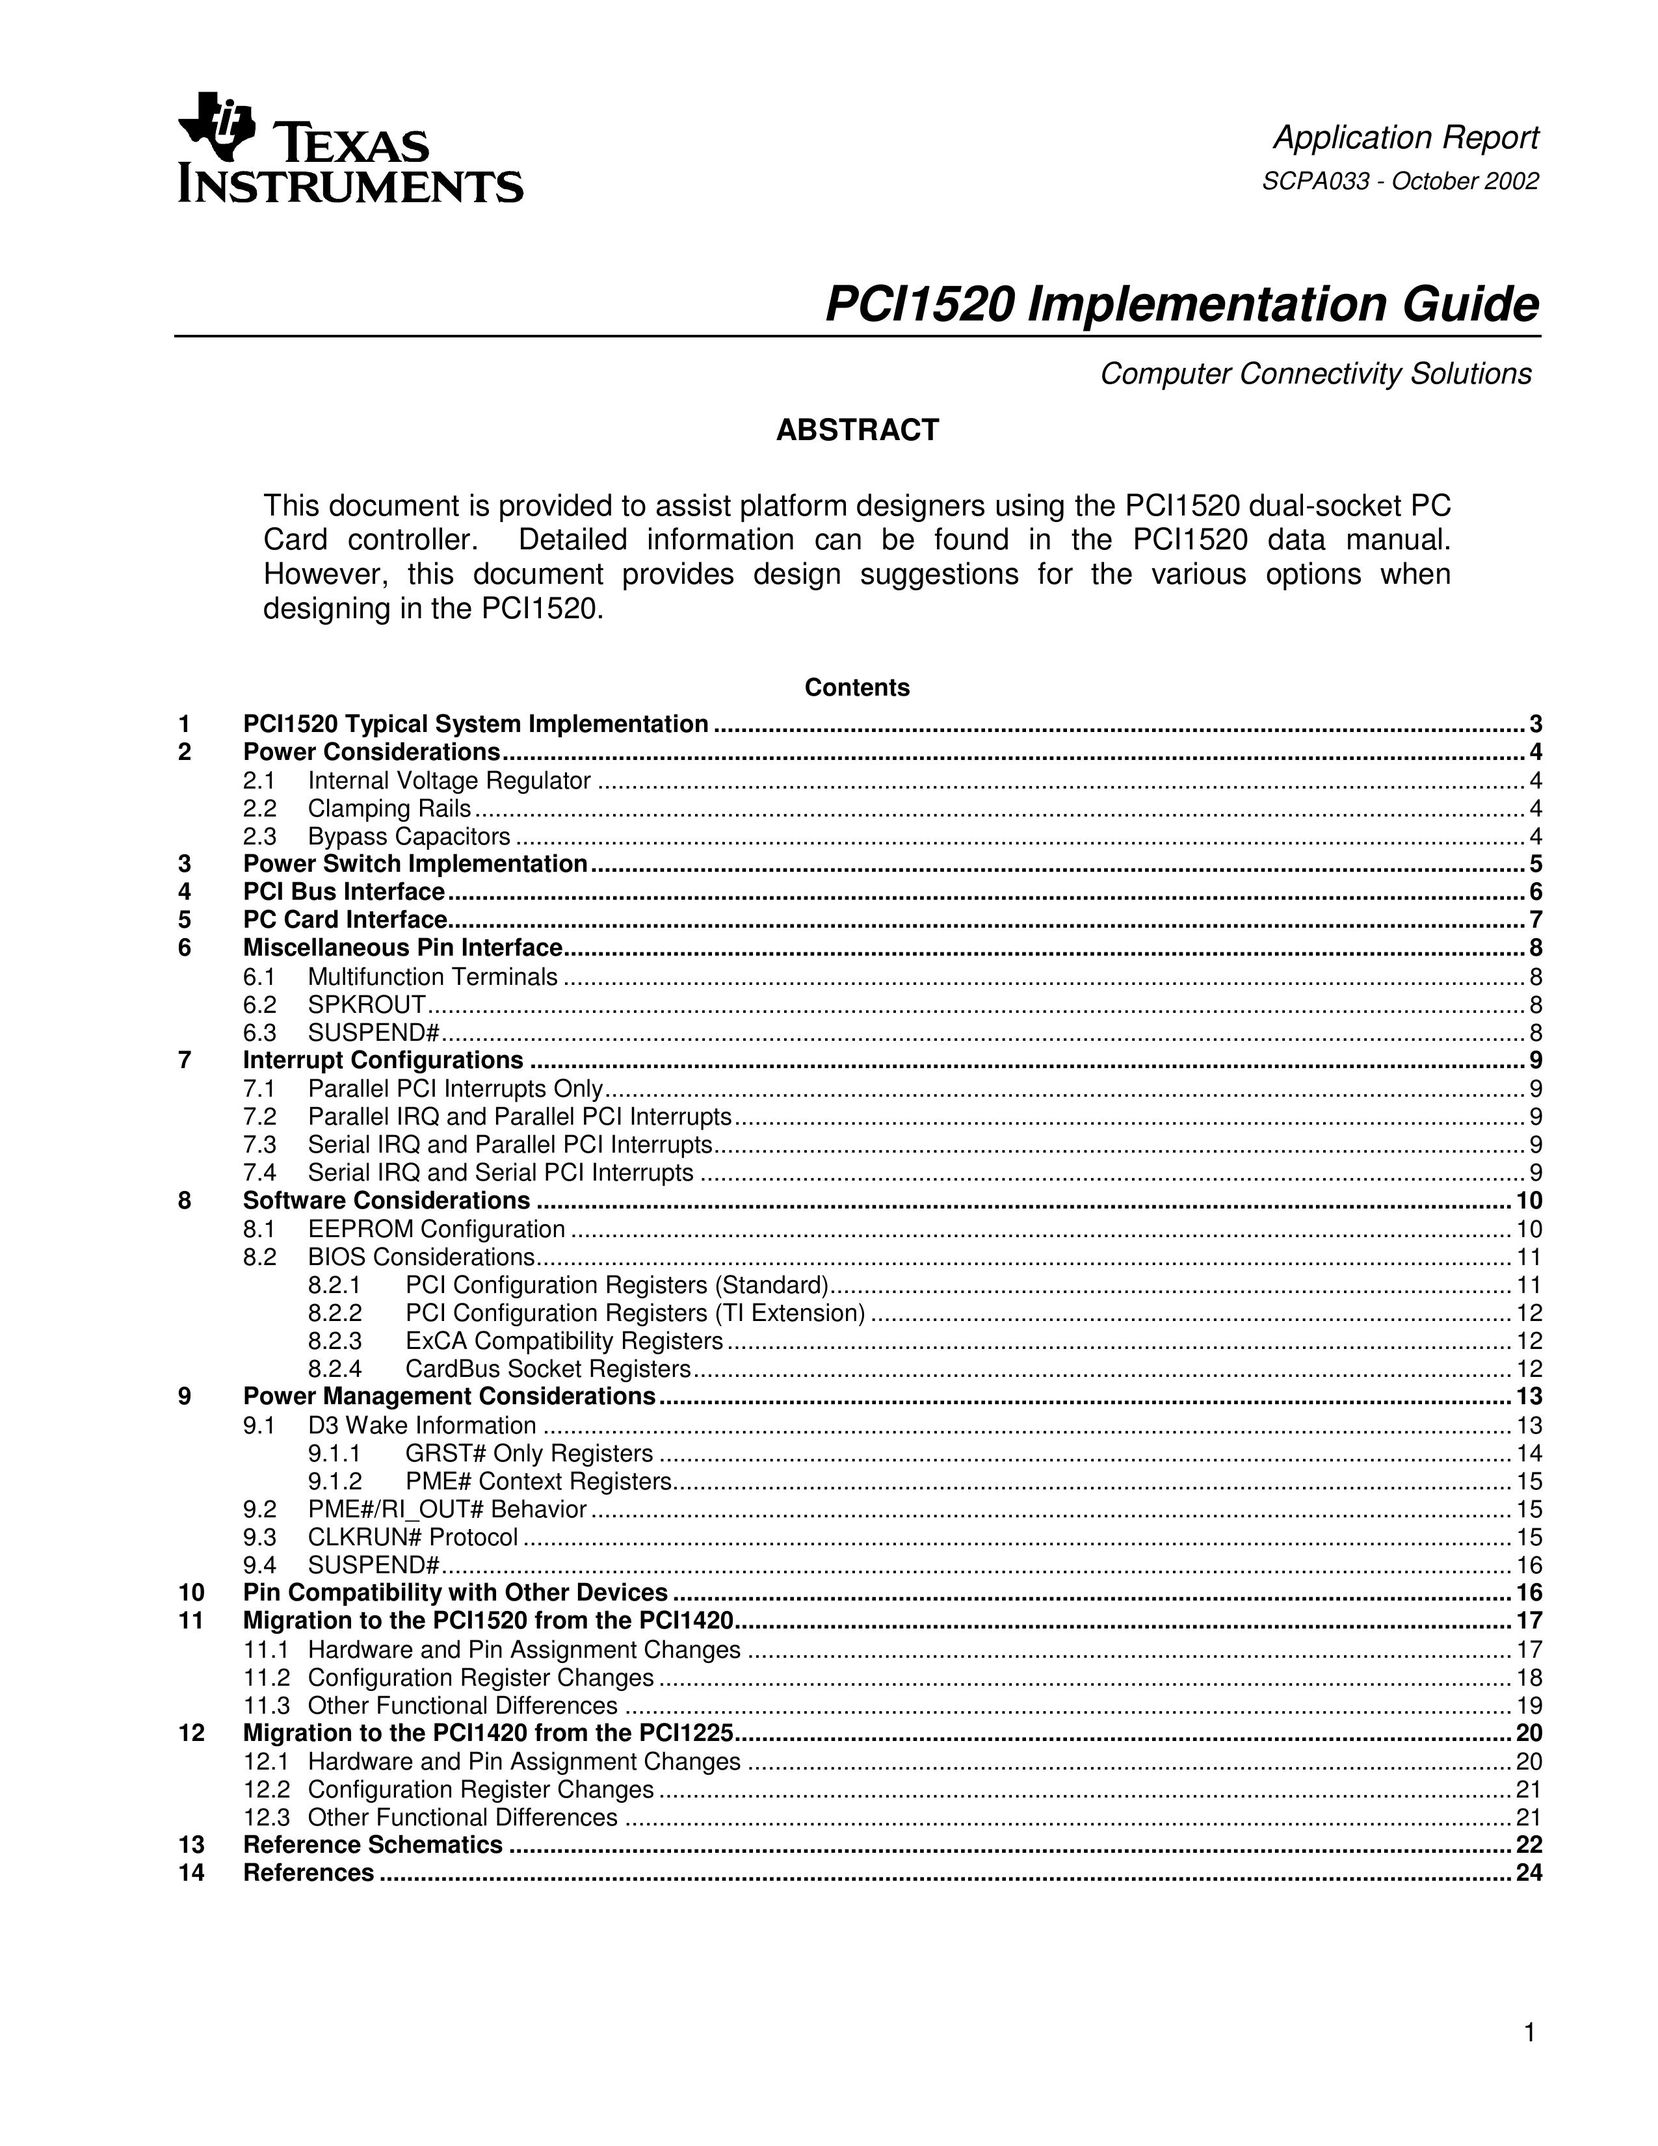 Texas Instruments PCI1520 Calculator User Manual